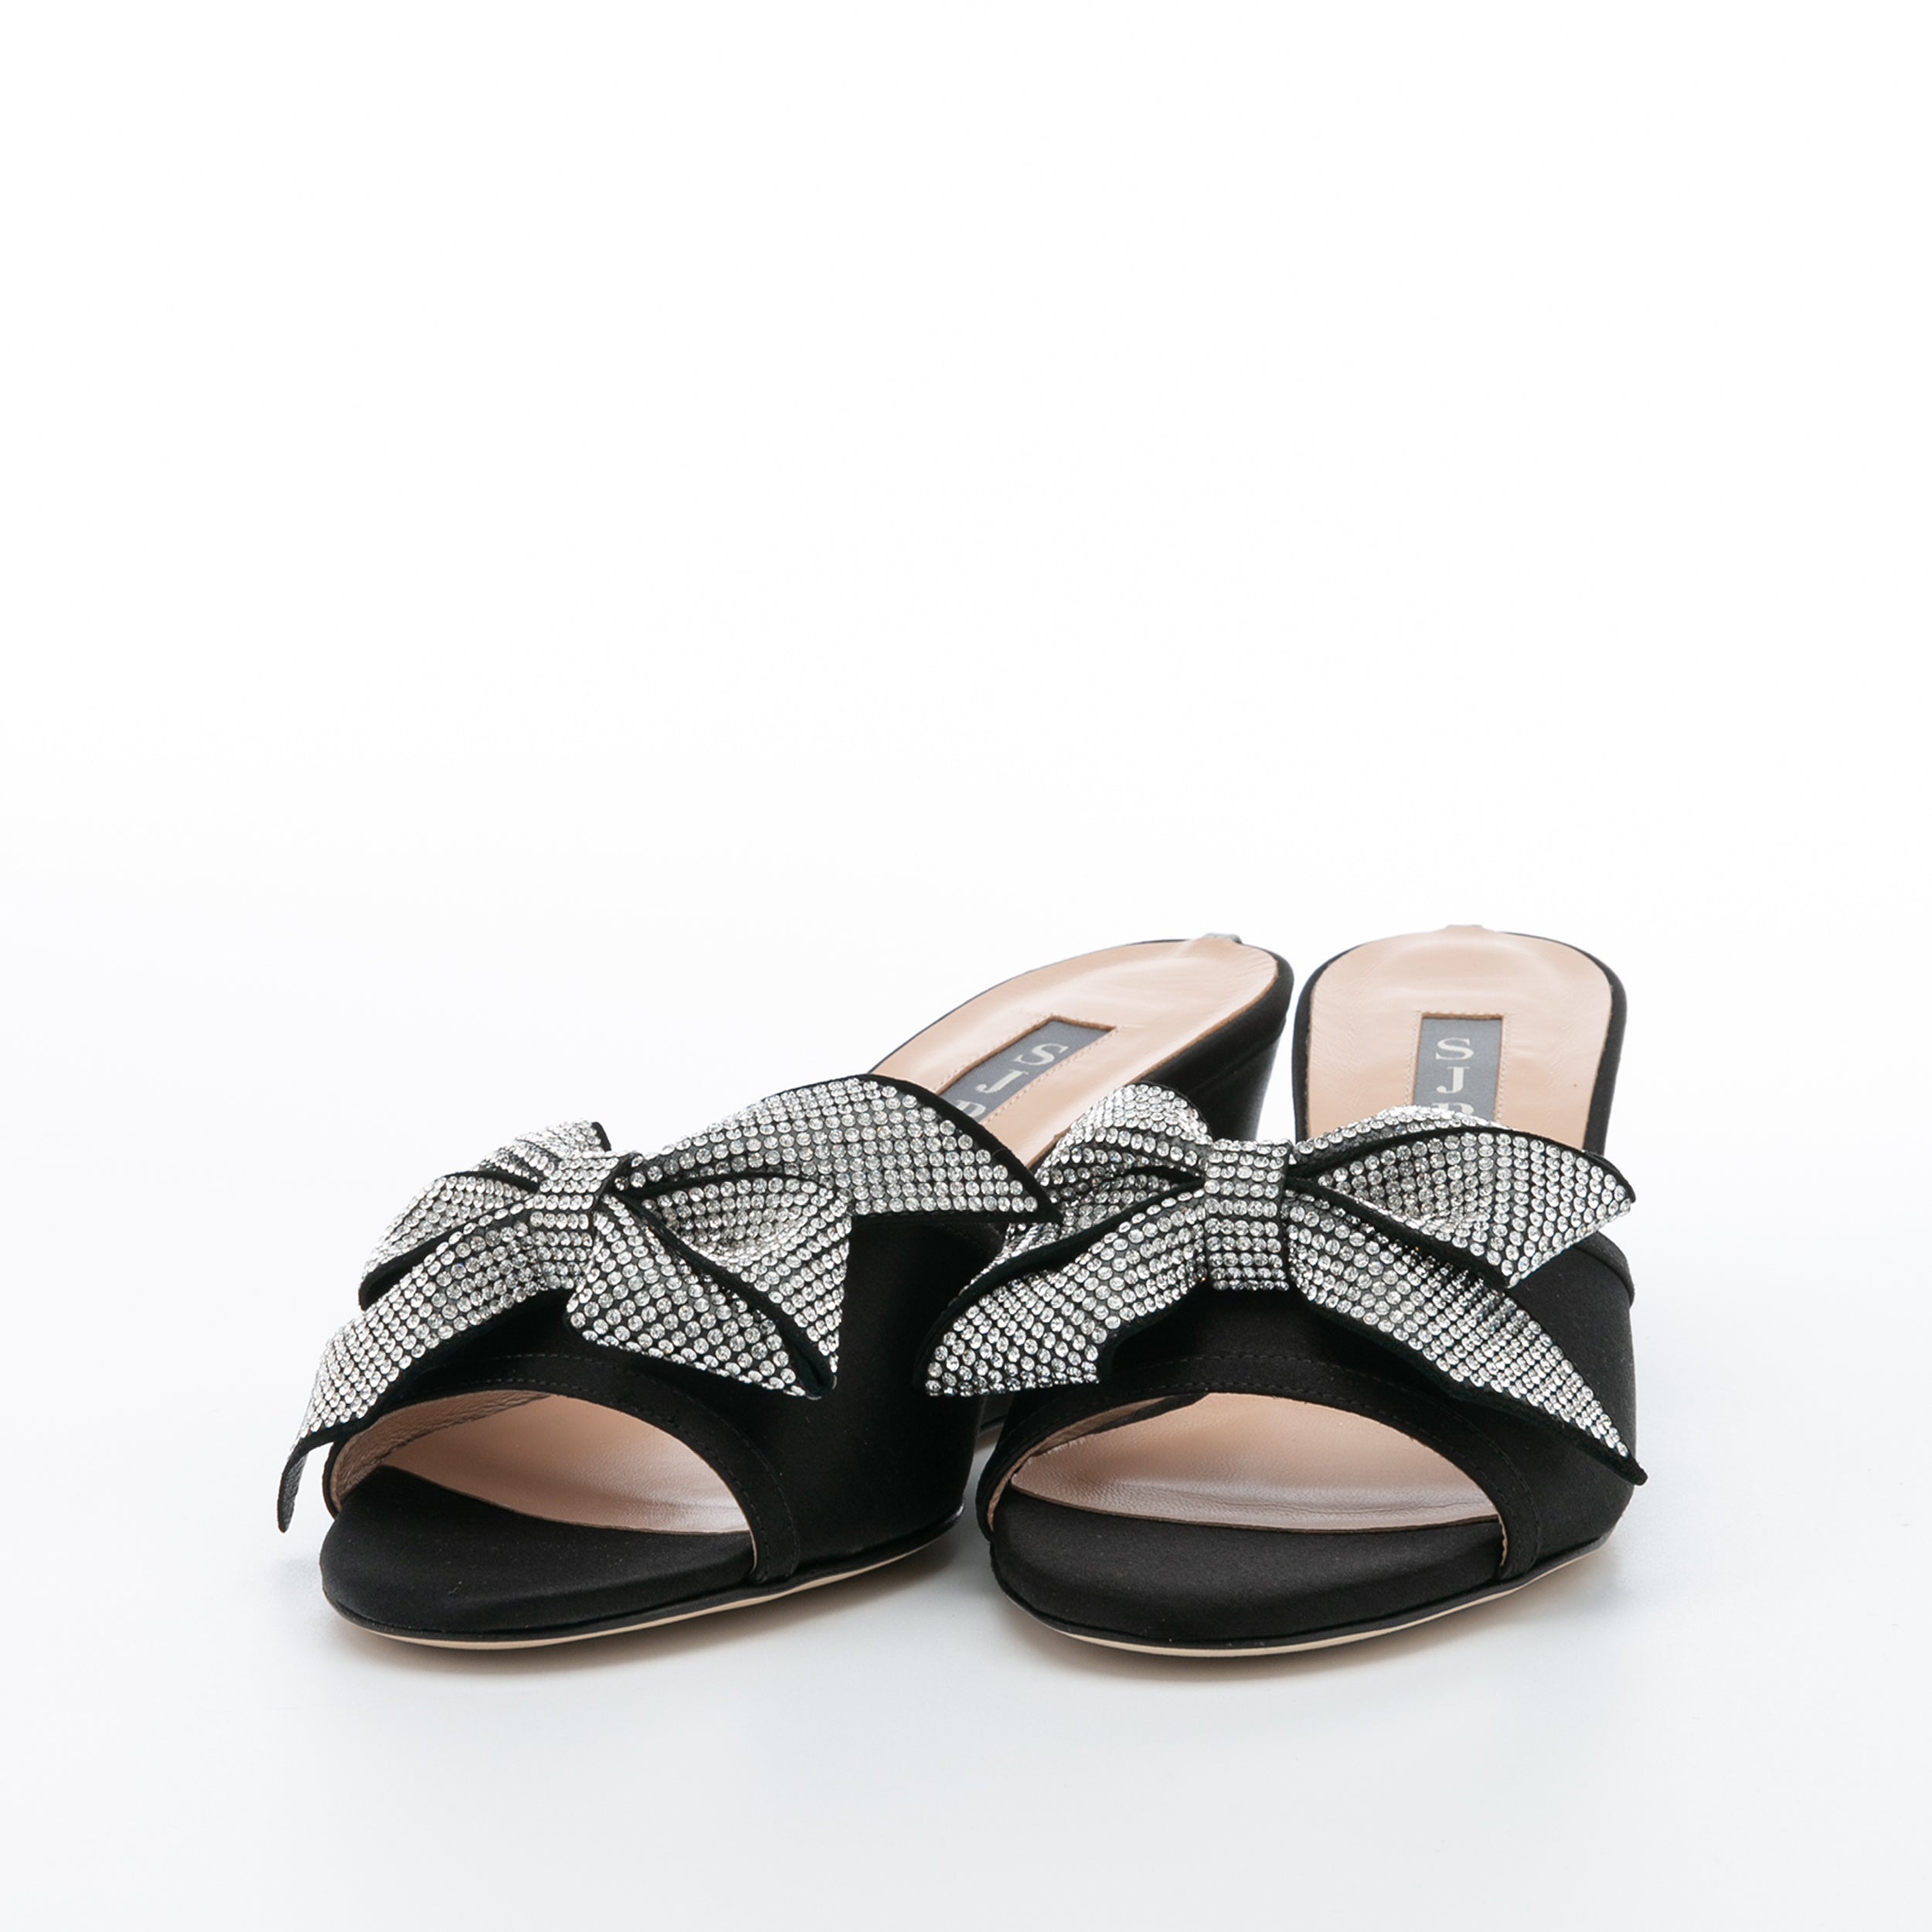 SJP by Sarah Jessica Parker Dina 50mm Black Satin Wedge Sandals